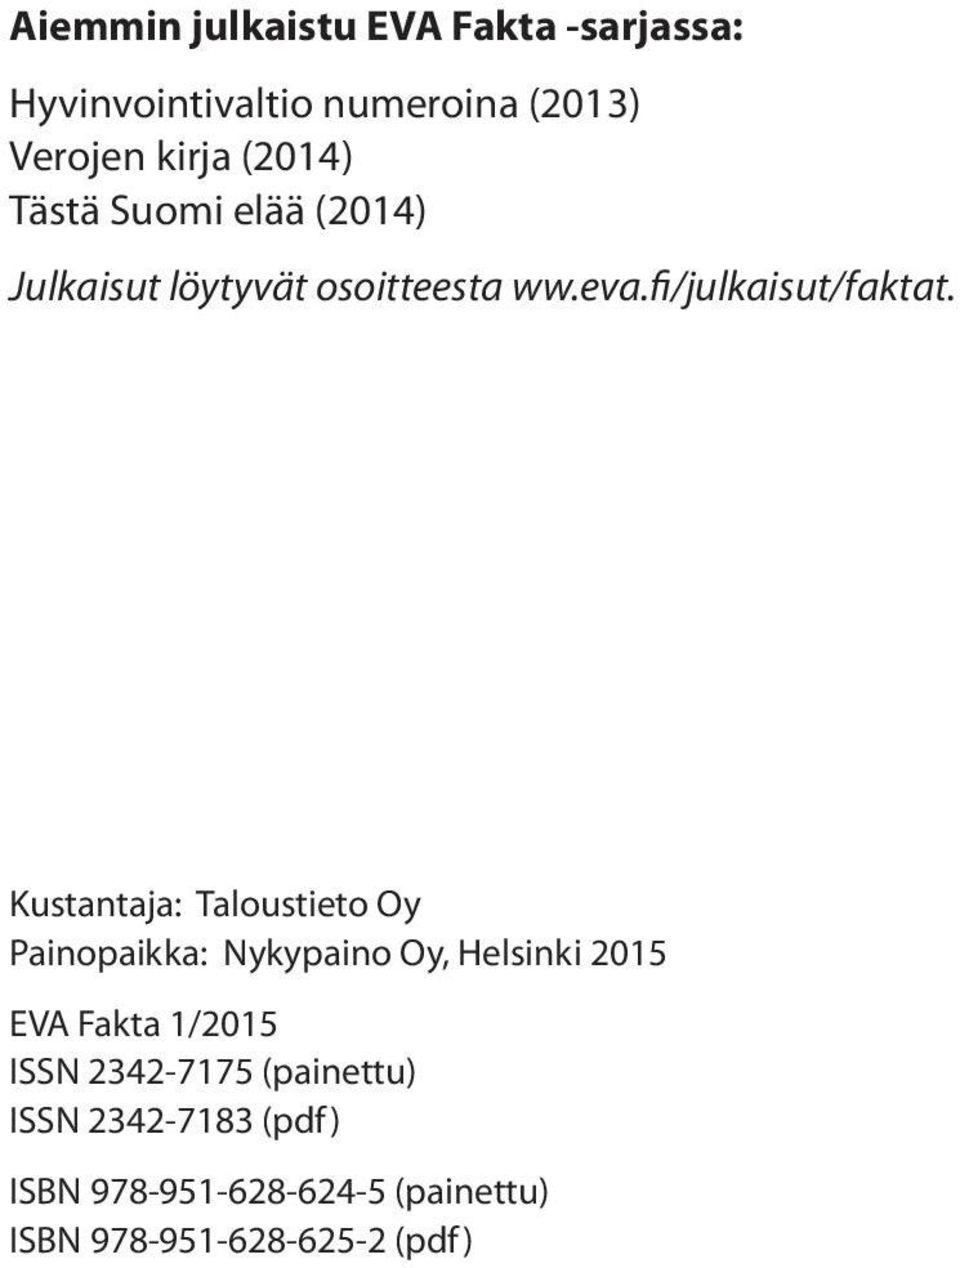 Kustantaja: Taloustieto Oy Painopaikka: Nykypaino Oy, Helsinki 2015 EVA Fakta 1/2015 ISSN